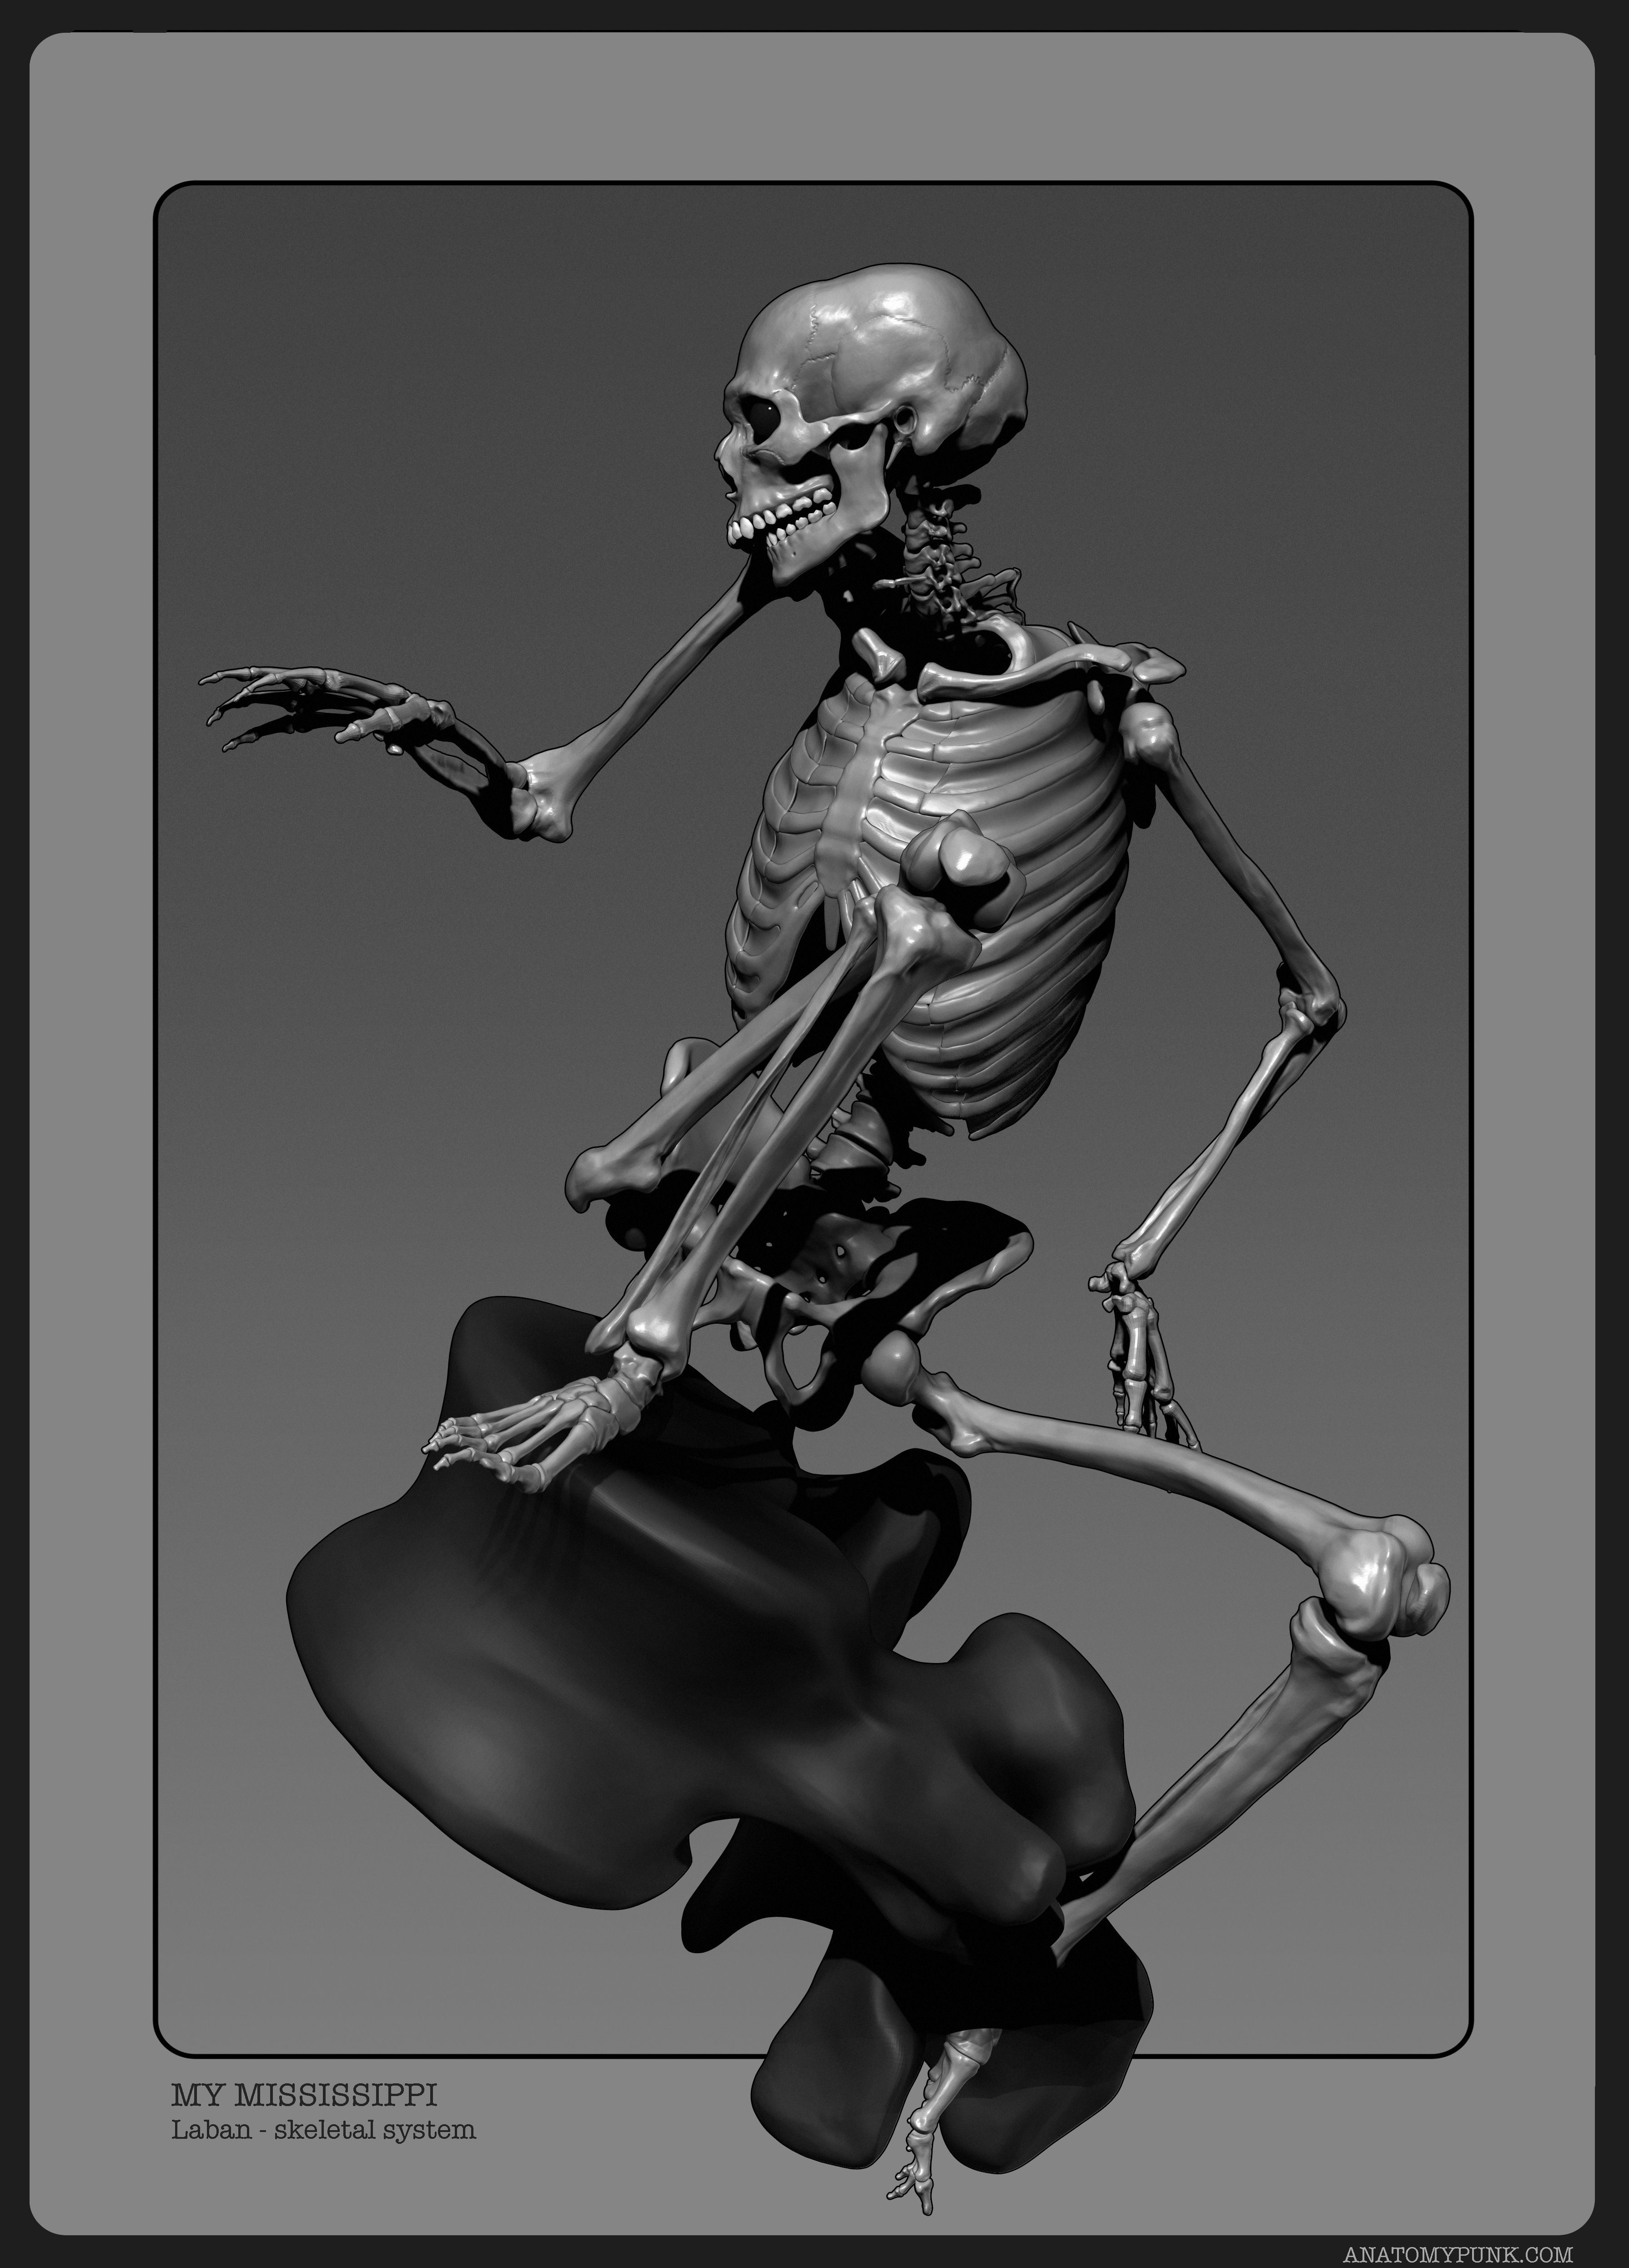 MyMississippi_Skeletal_structure_anatomypunk